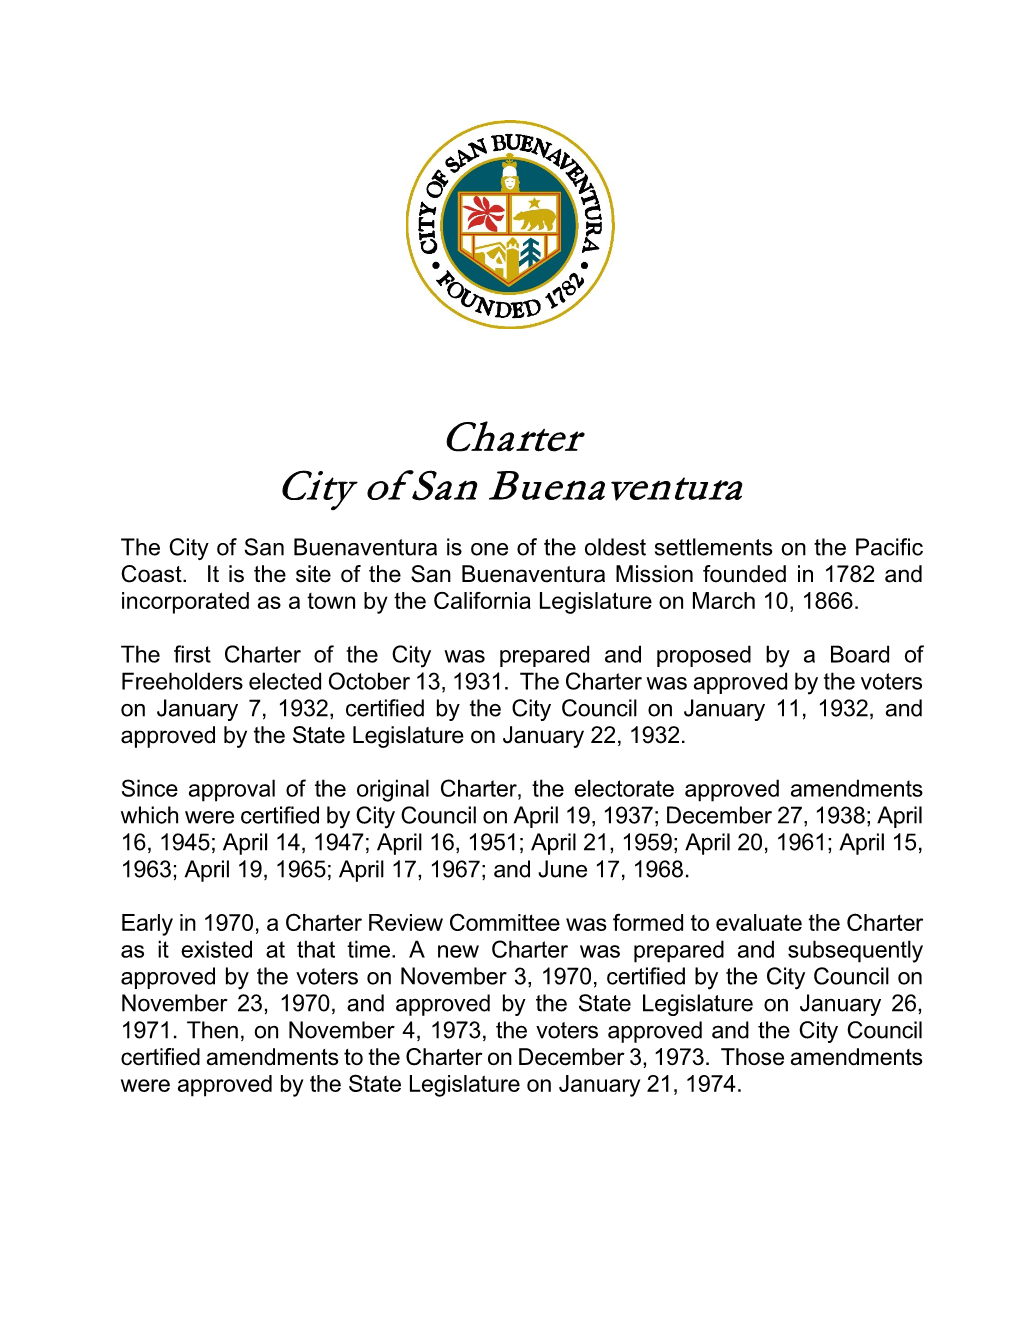 Charter City of San Buenaventura